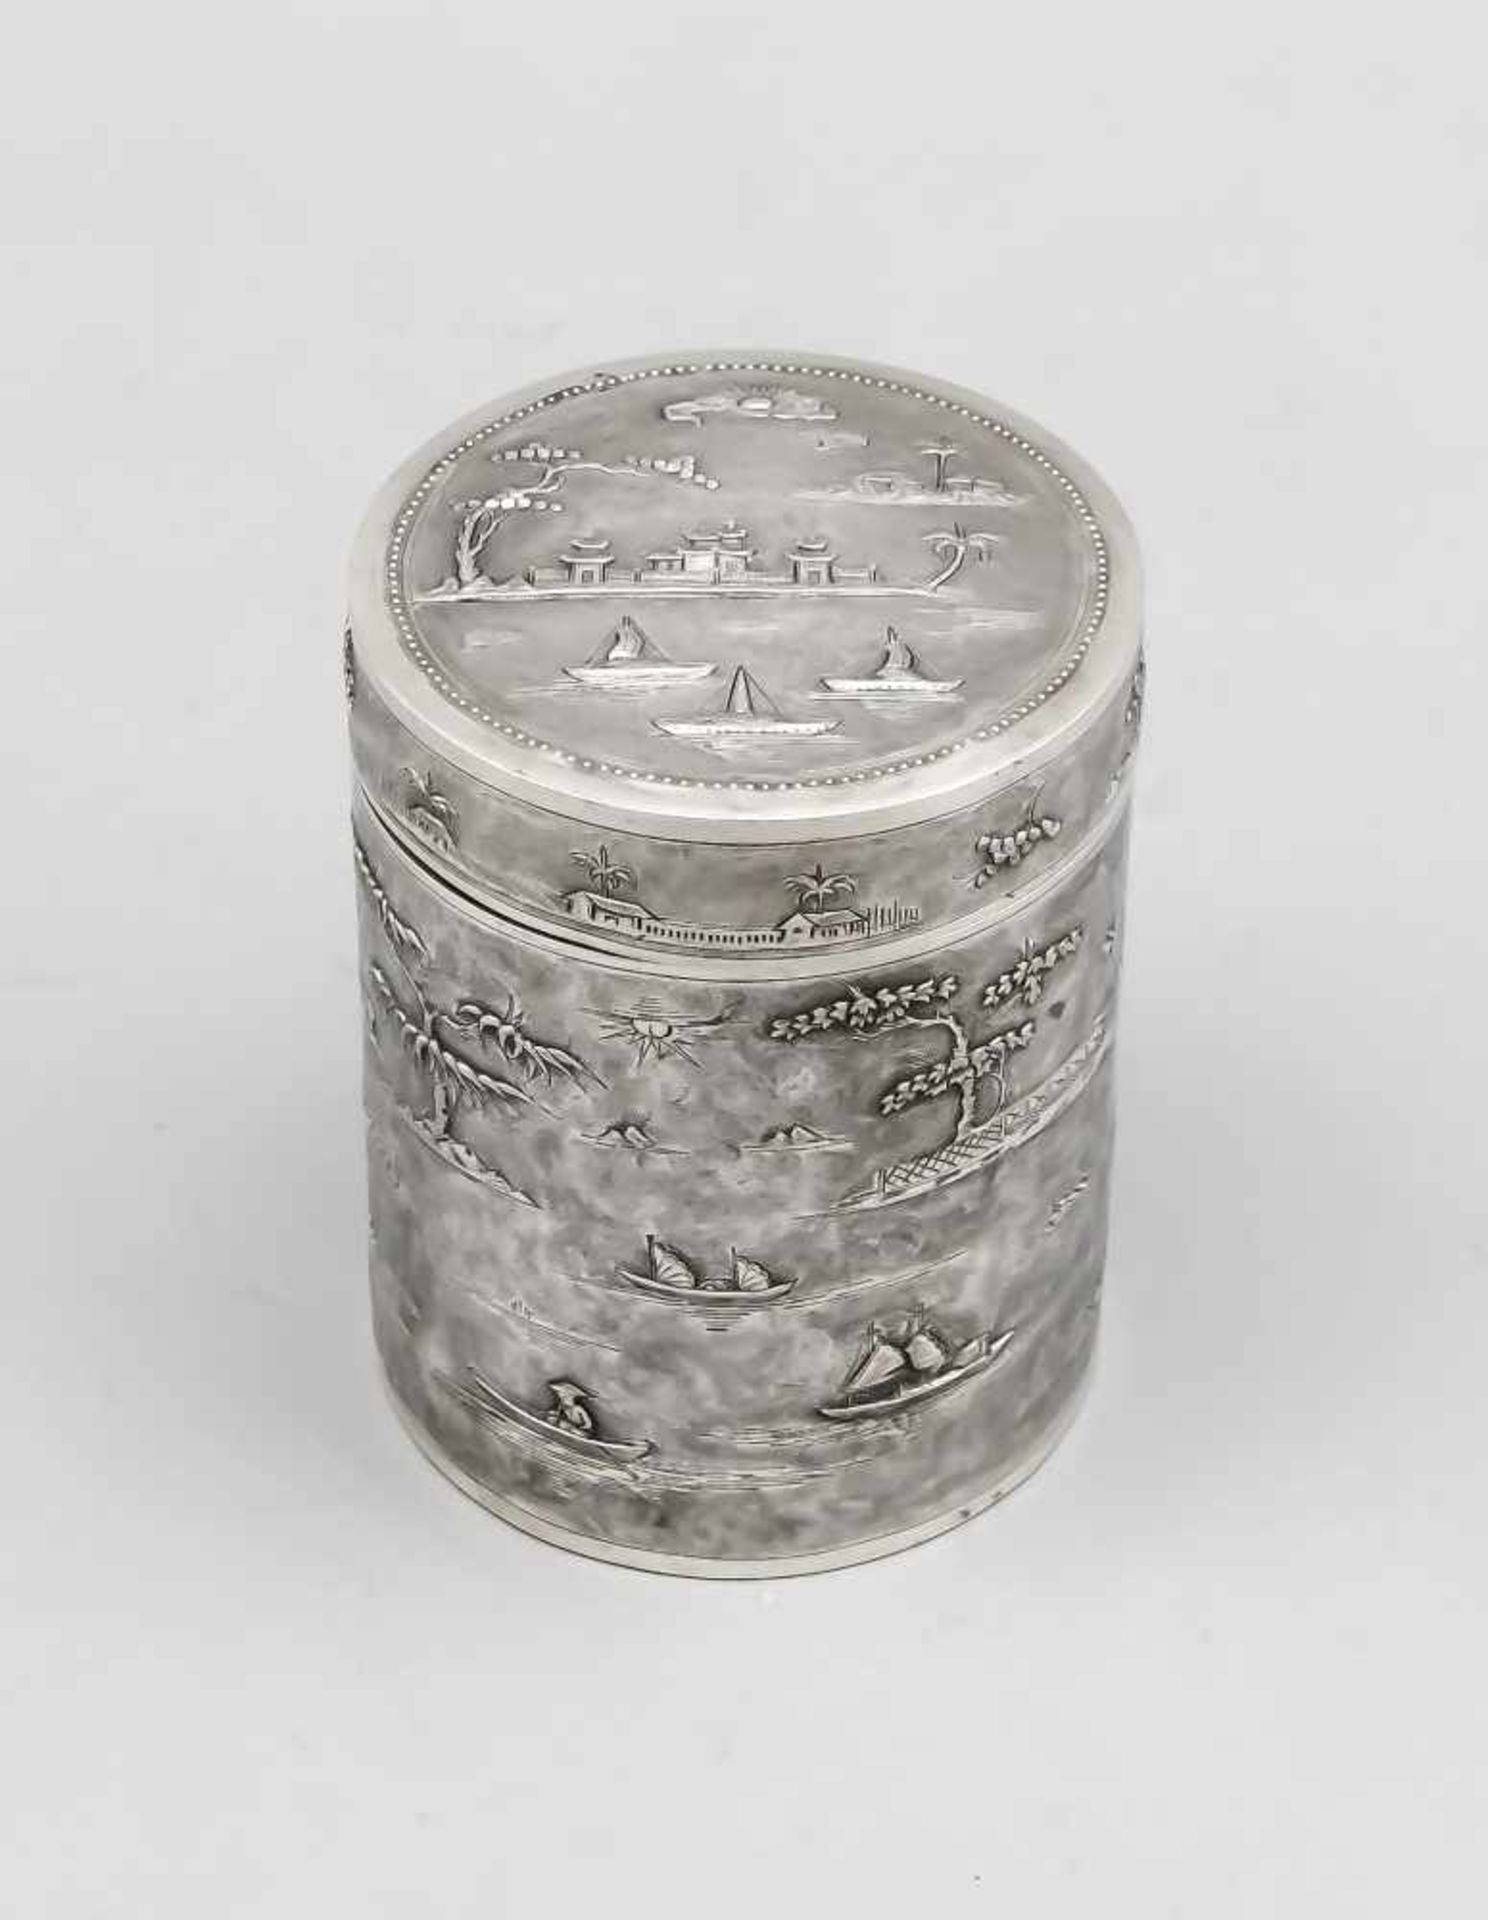 Runde Deckeldose, Vietnam, 20. Jh., bez. Hong Thai, Silber 900/000, zylindrischer Korpus,Wandung mit